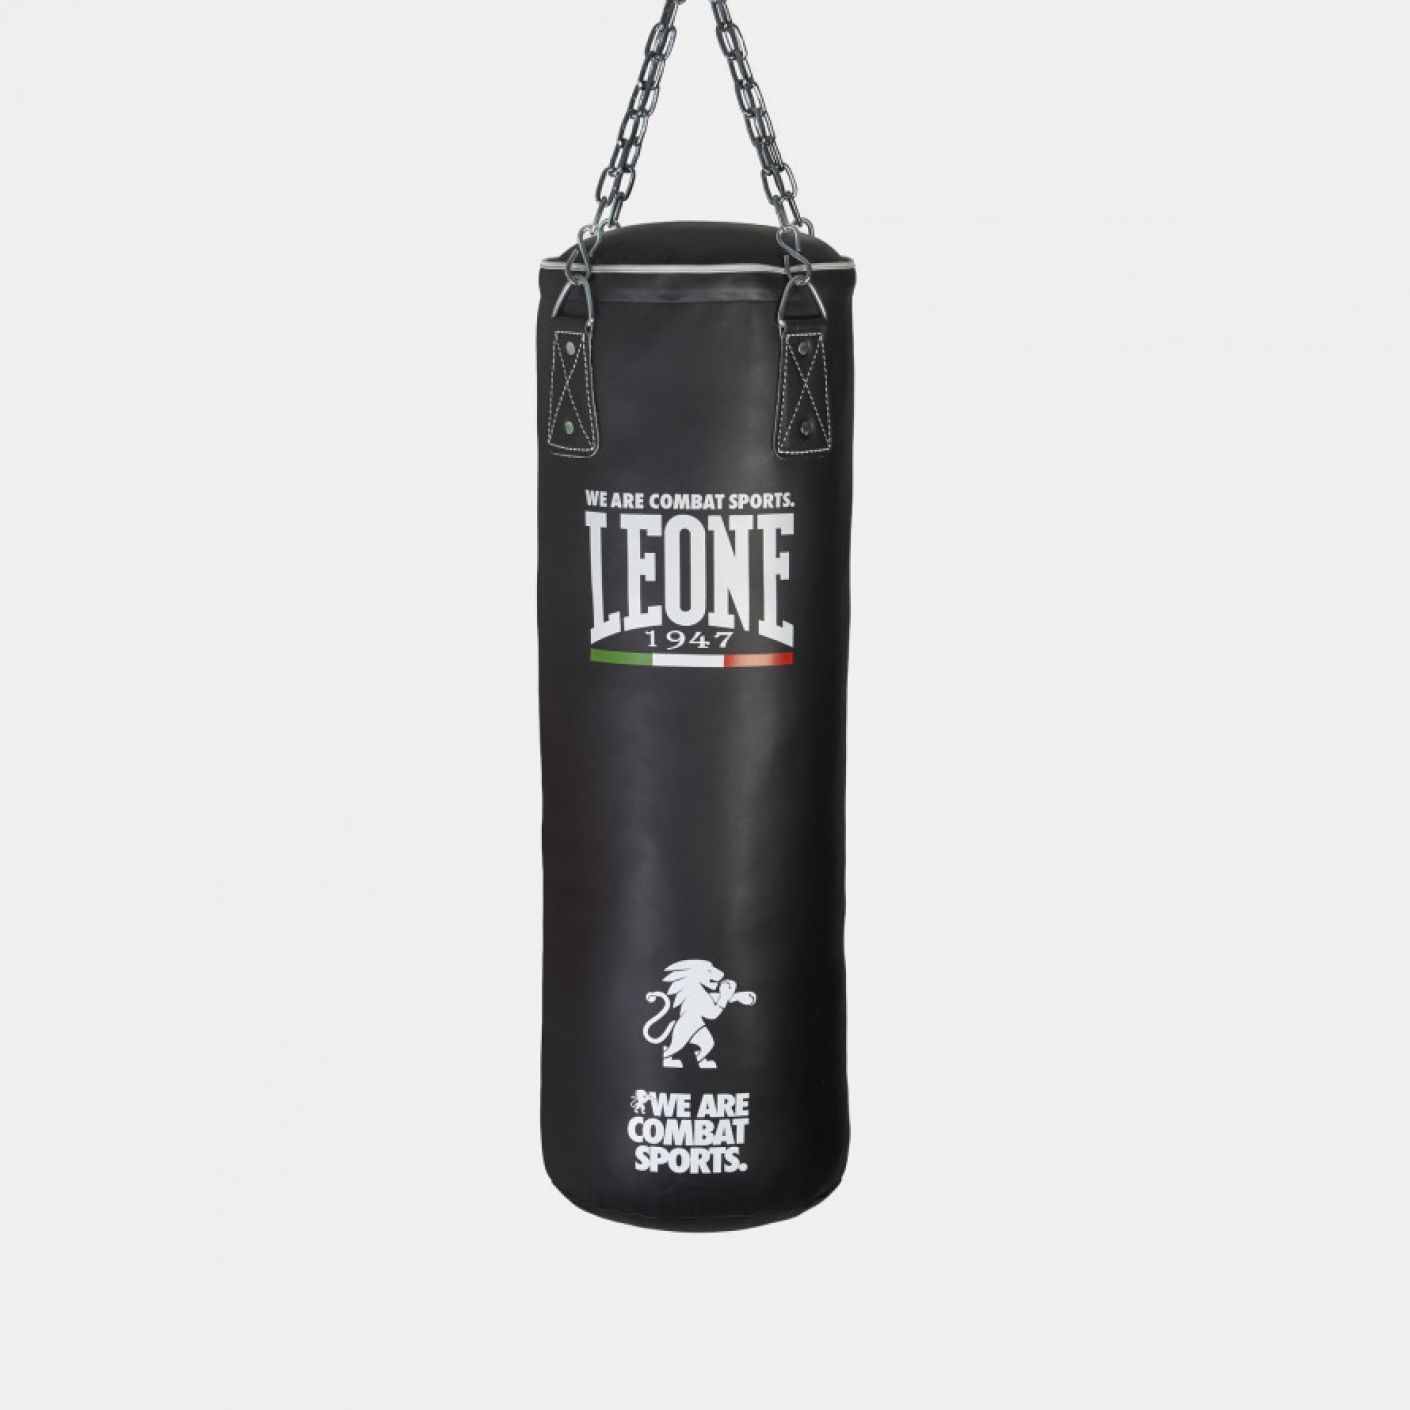 Leone Basic Boxing Bag 20 Kg Black